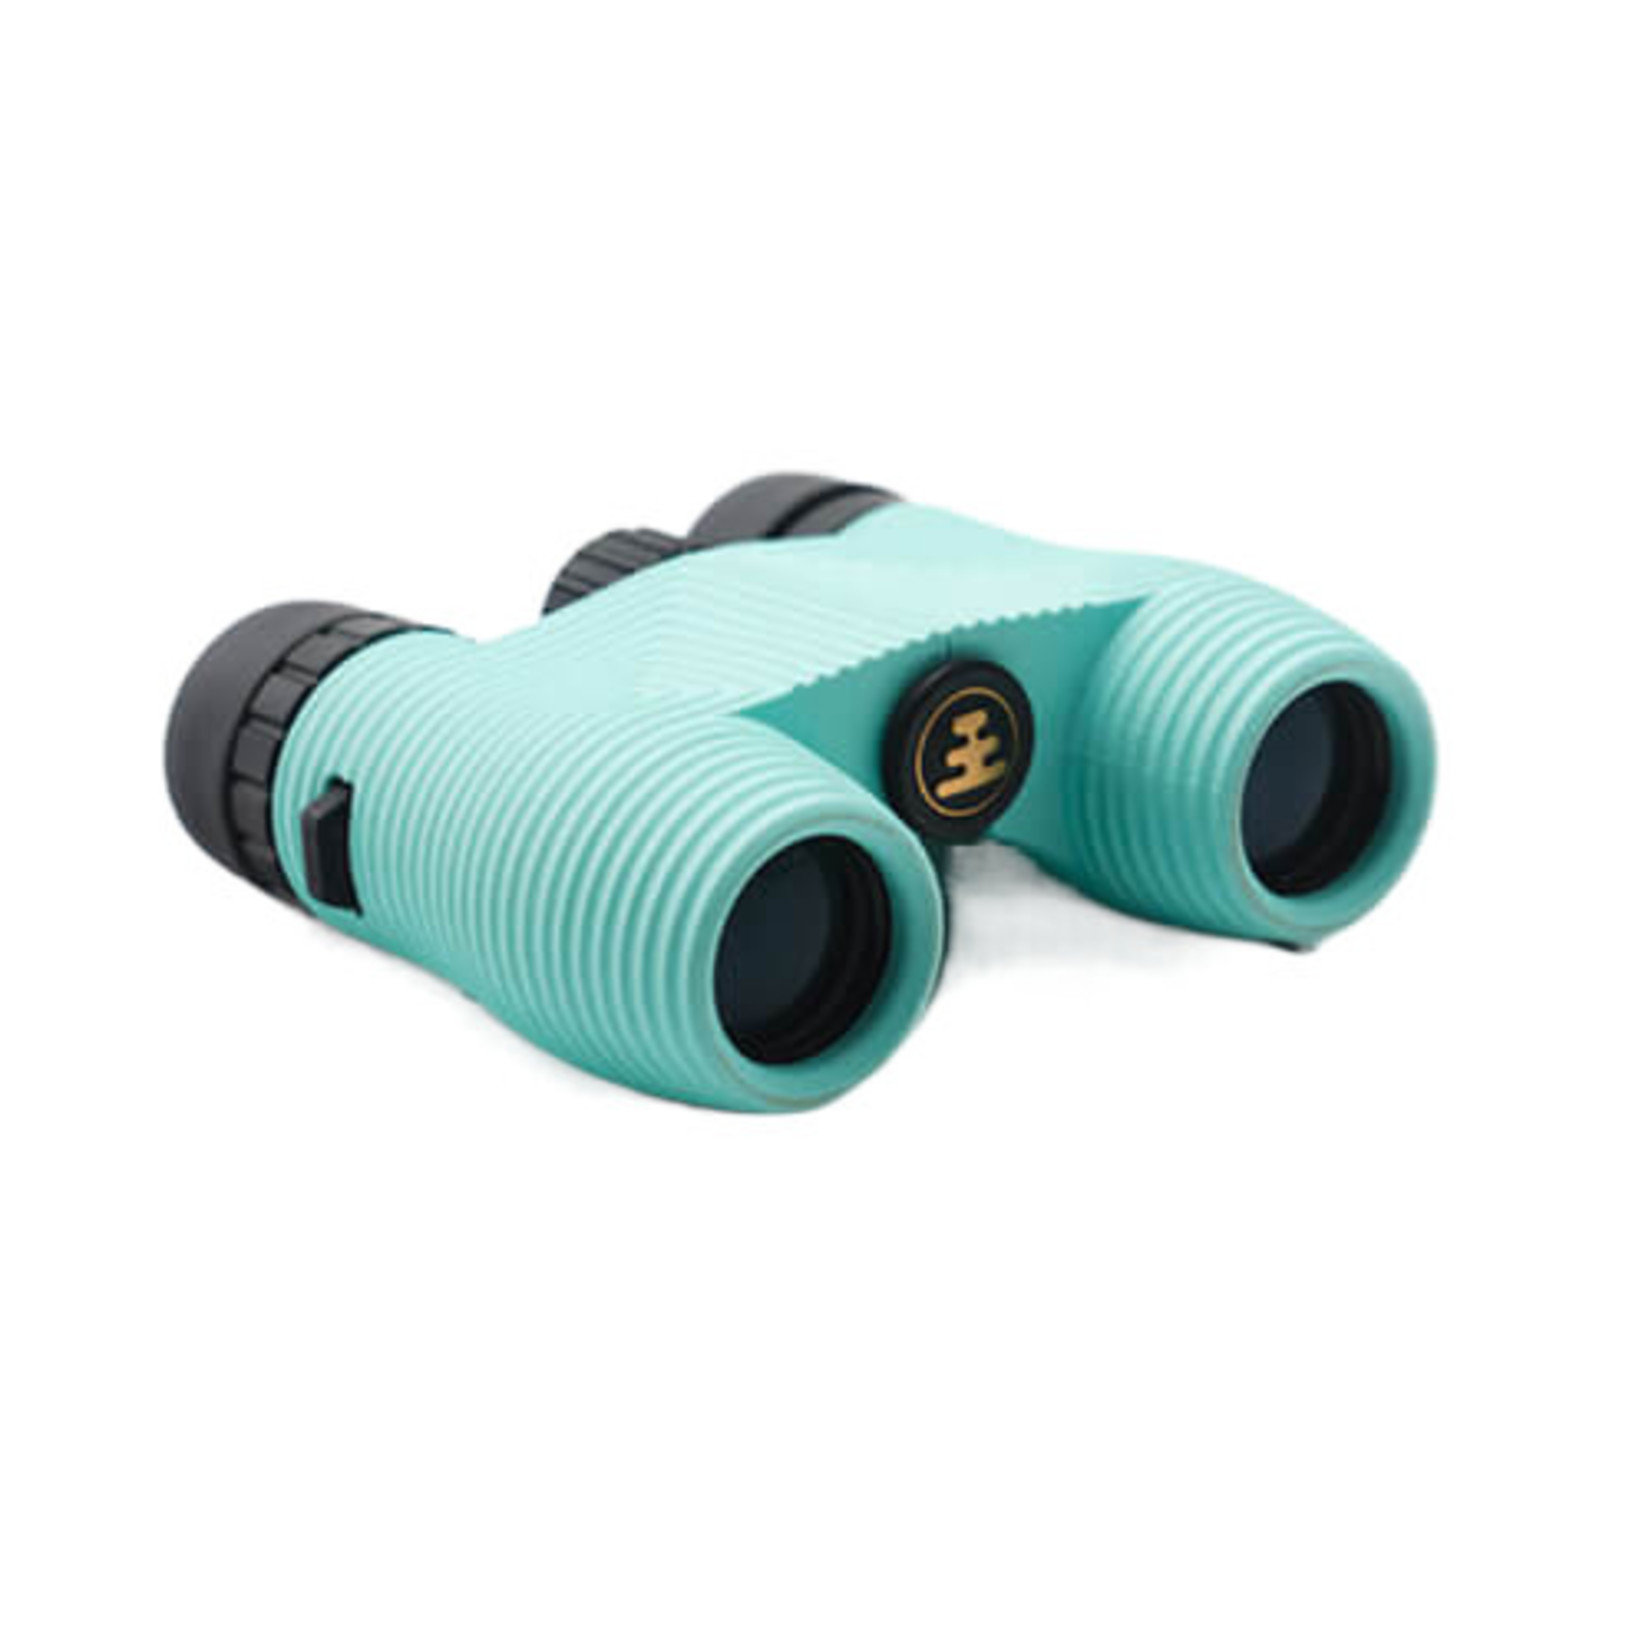 NOCS Provisions NOCS 8 x 25 Standard Issue Waterproof Binoculars in  Sea Foam Green